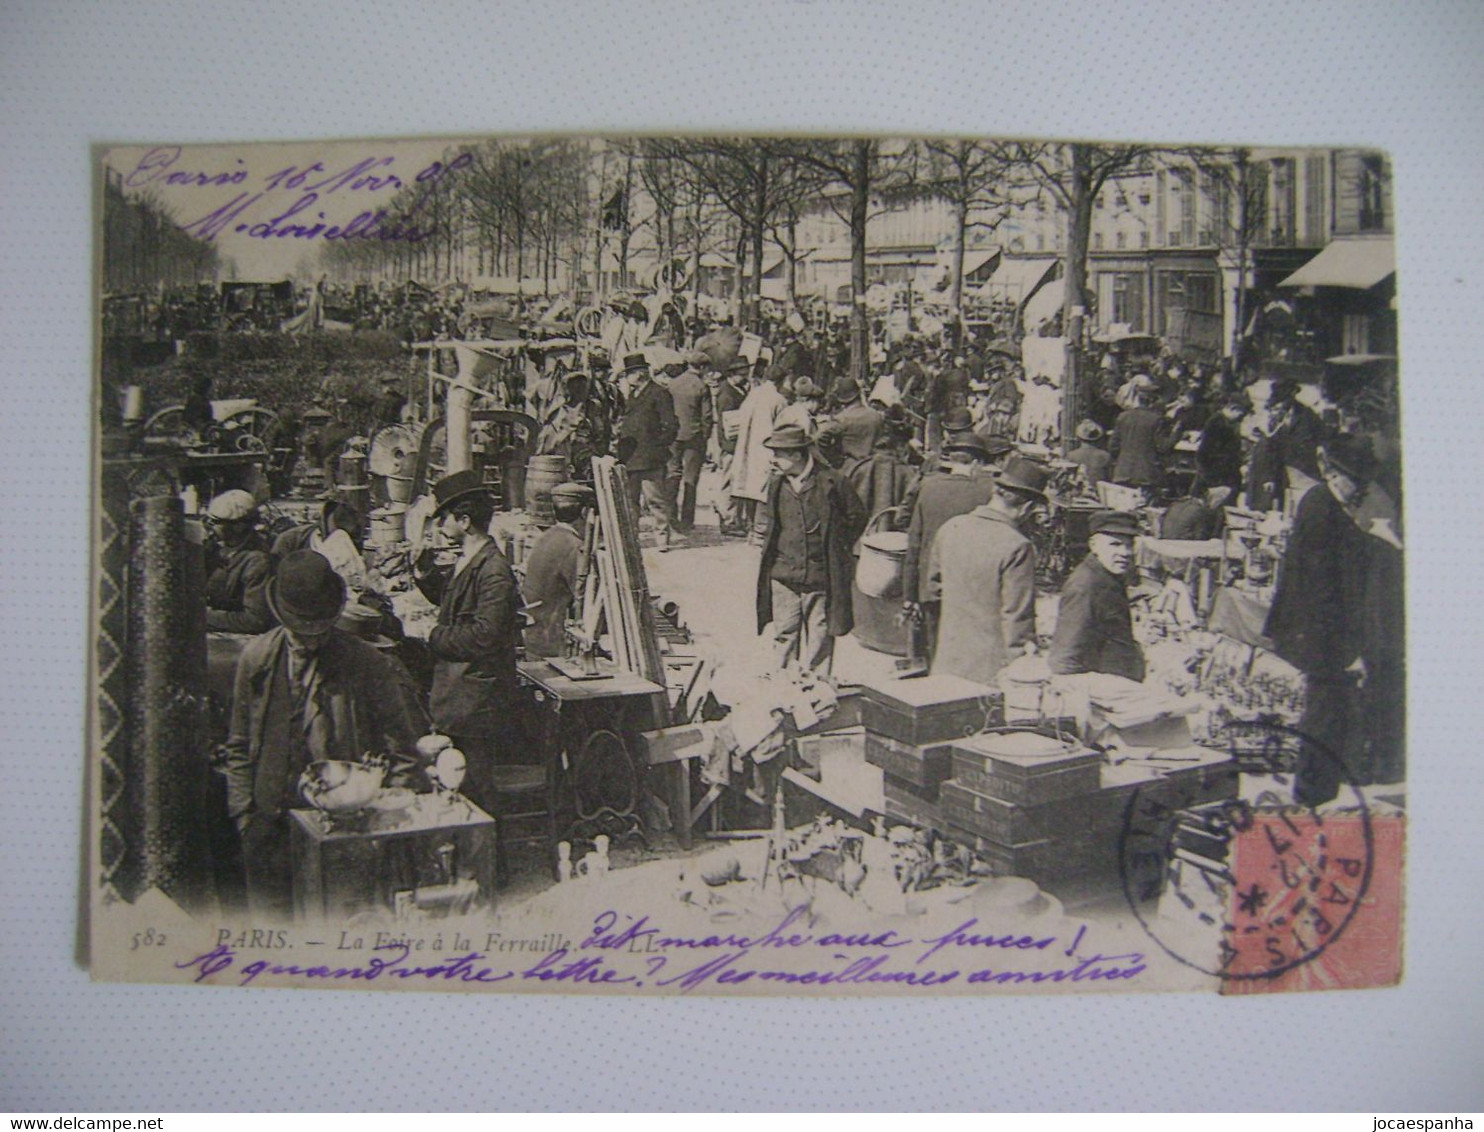 FRANCE - POST CARD PARIS - LA FEIRE A LA FERRAILLE SENT TO BRAZIL IN 1905 IN THE STATE - Fiere